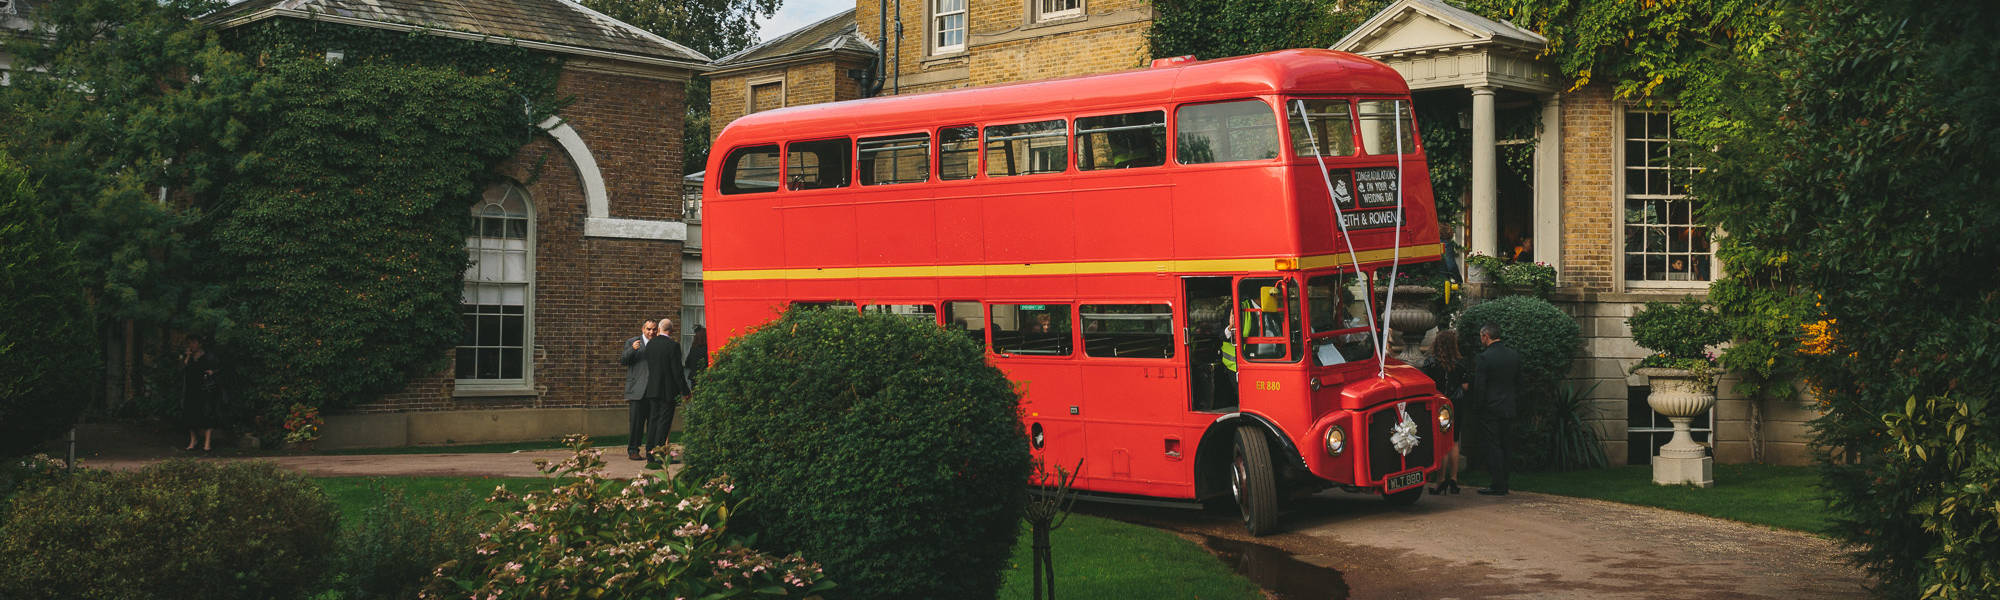 Wedding Double Decker red London Bus